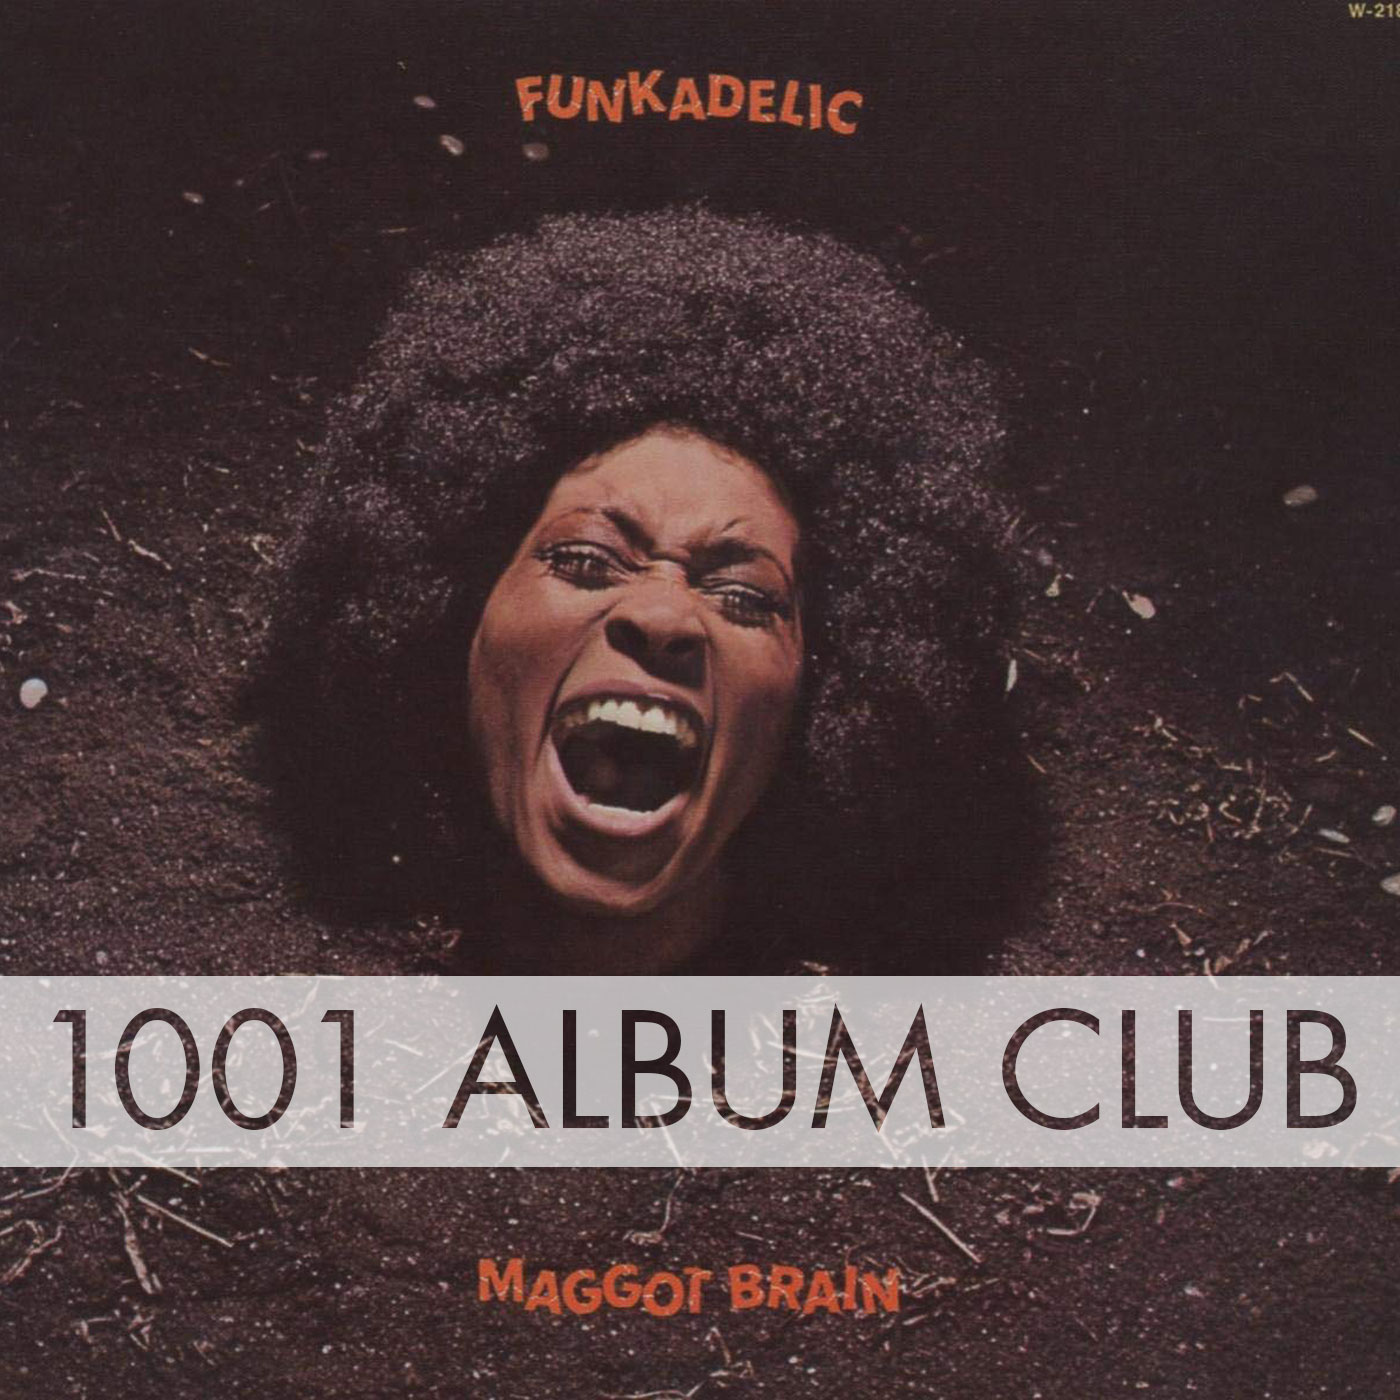 Brains mp3. Funkadelic Maggot Brain. Funkadelic Maggot Brain винил. Funkadelic Maggot Brain download.